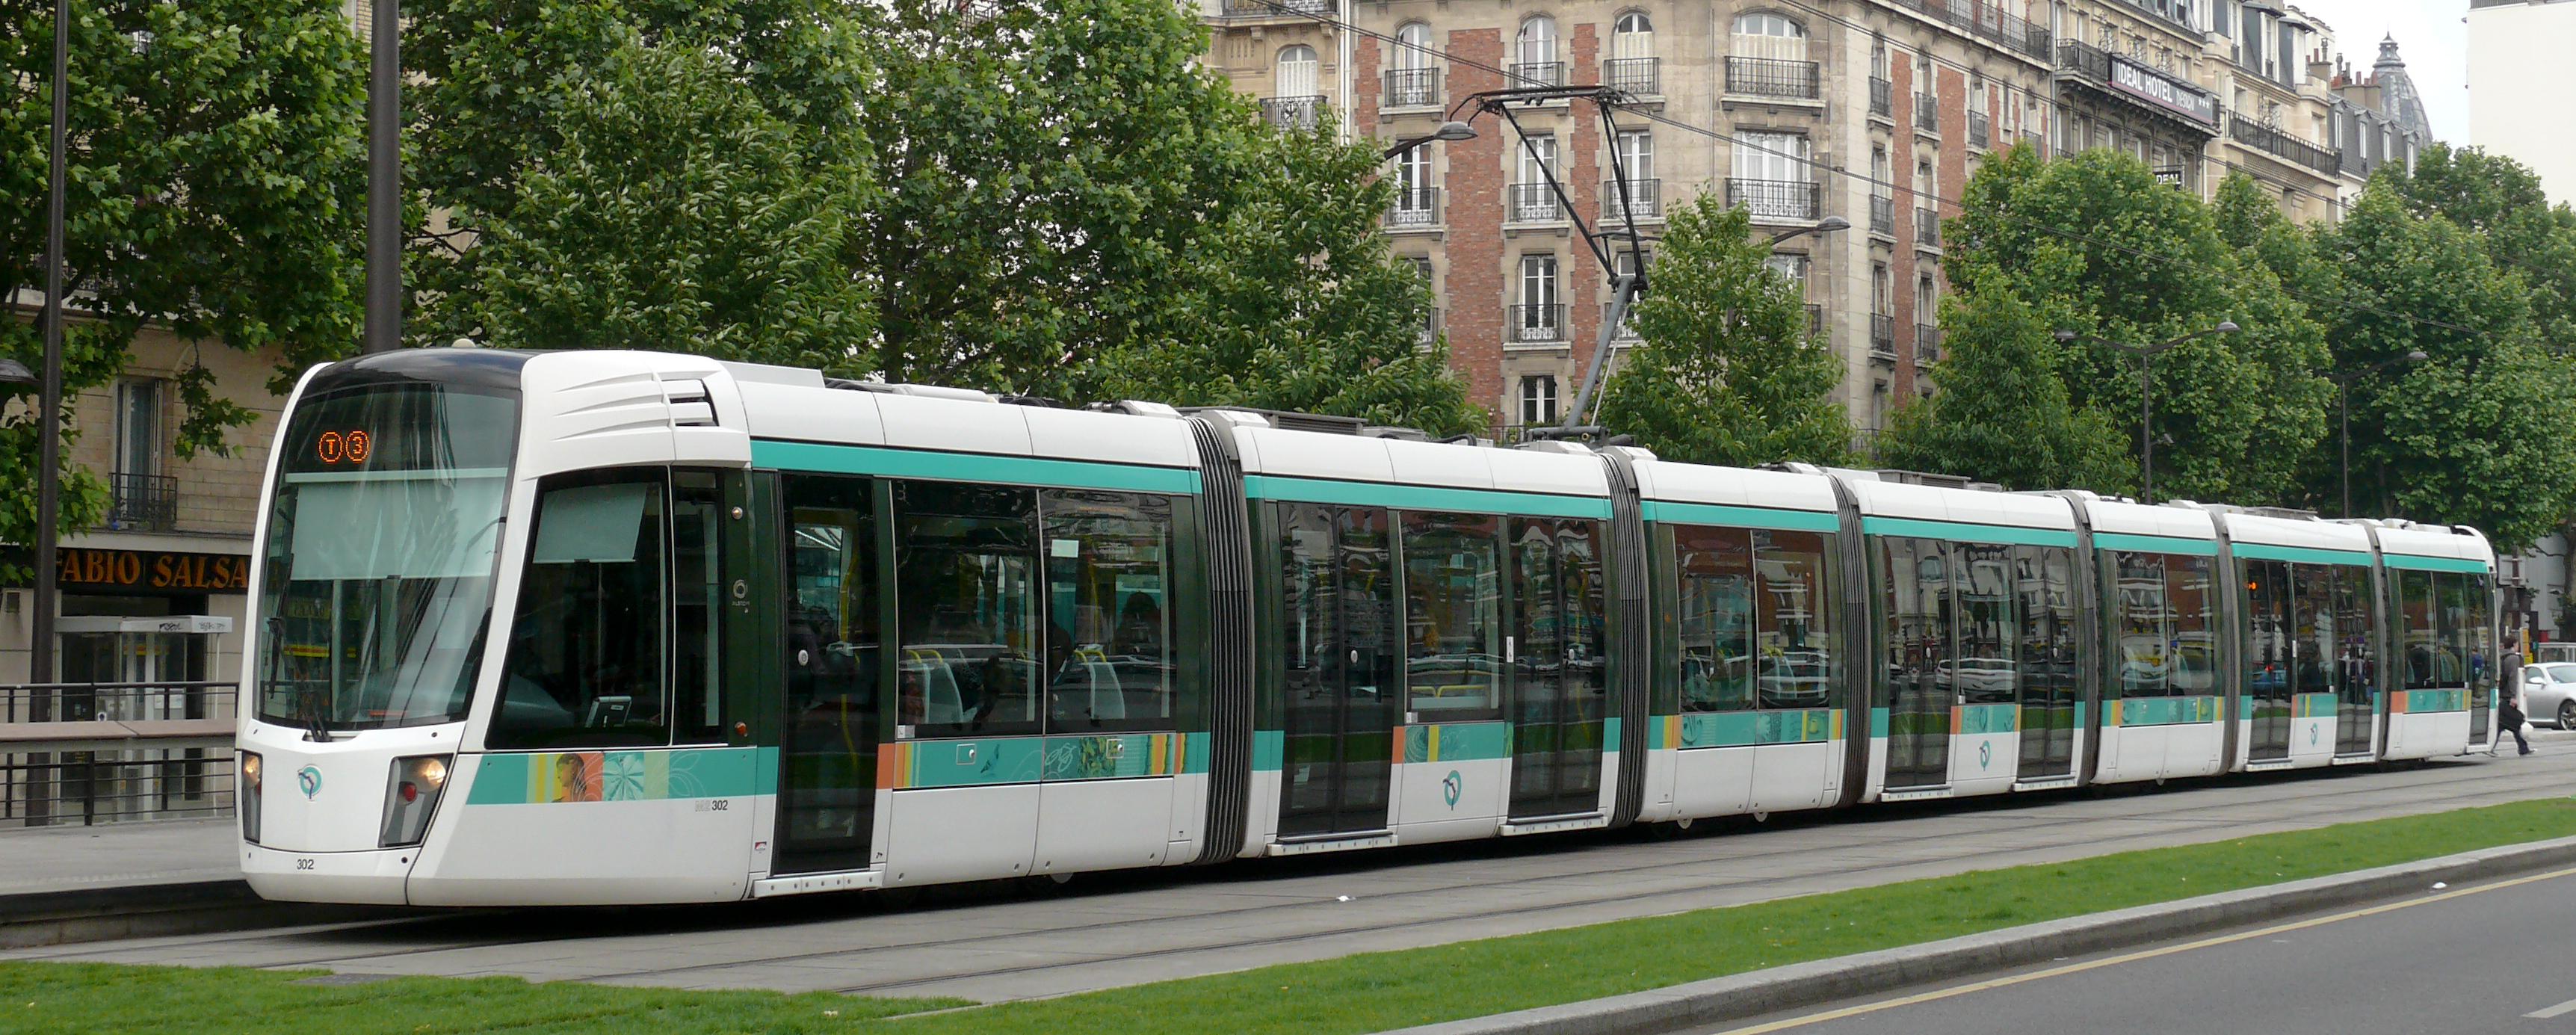 Alstom Citadis - tramway signalling